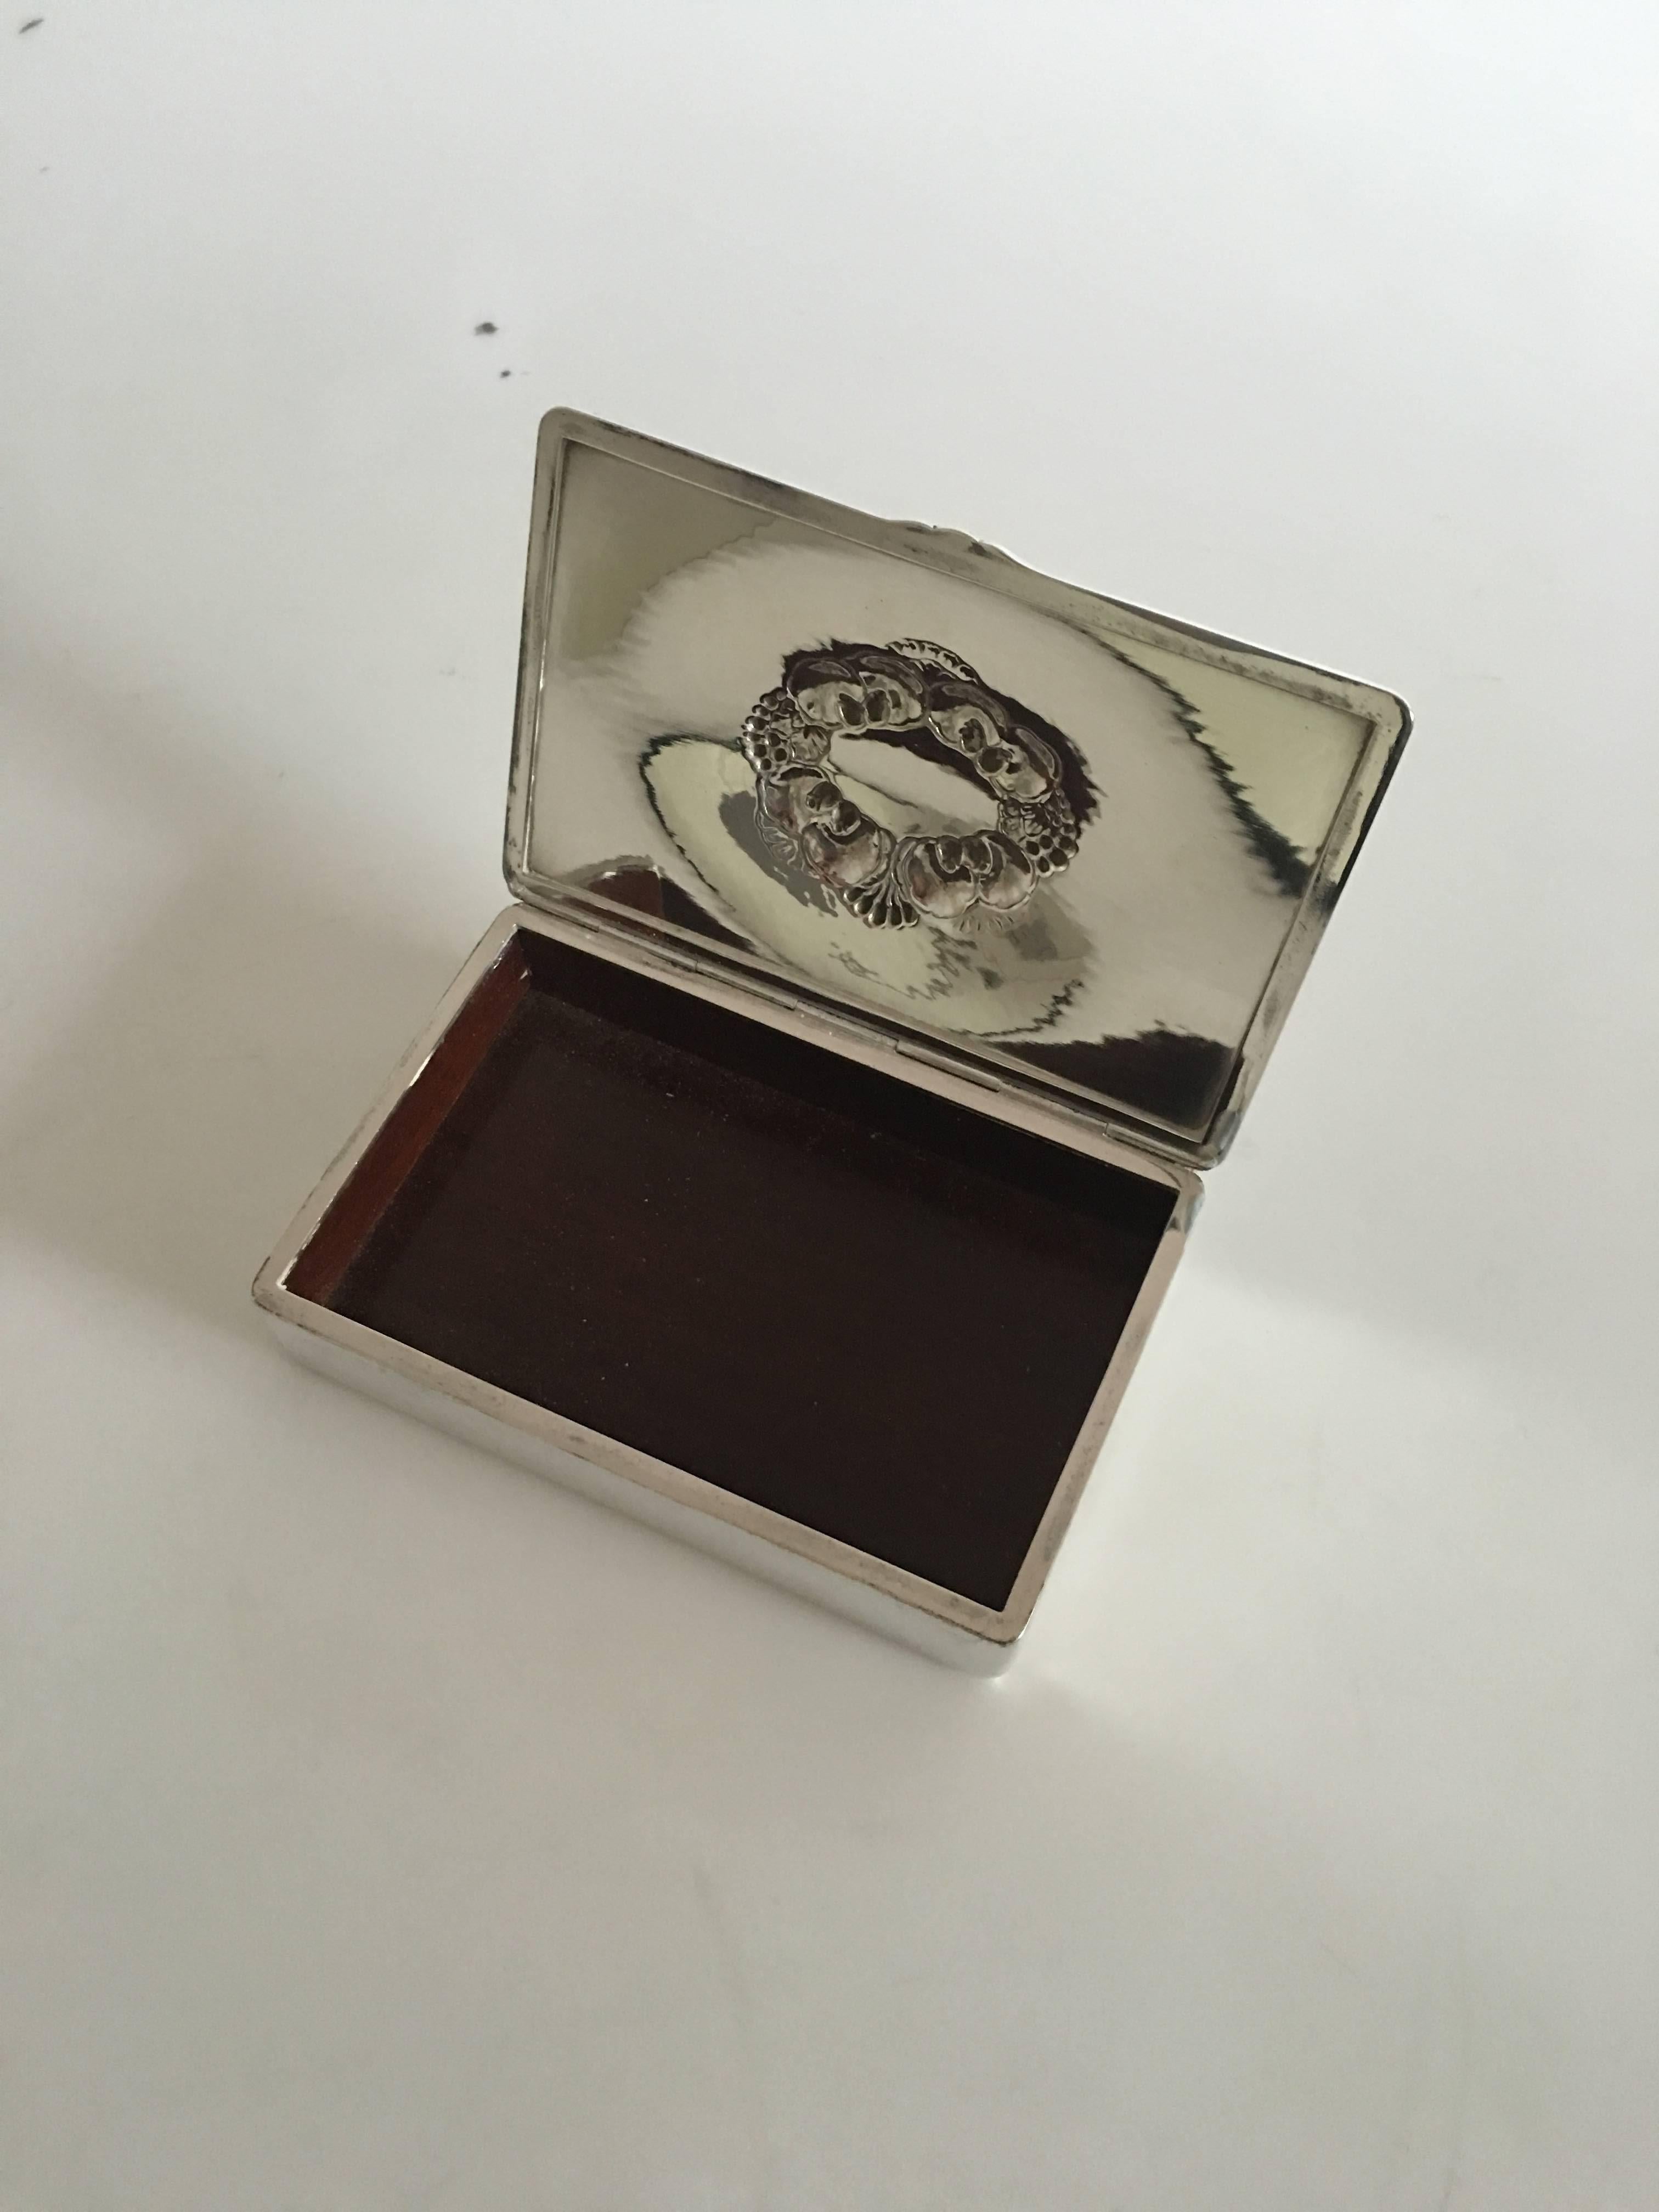 Georg Jensen Sterling Silver Box or Cigarette Box #507A In Excellent Condition For Sale In Copenhagen, DK